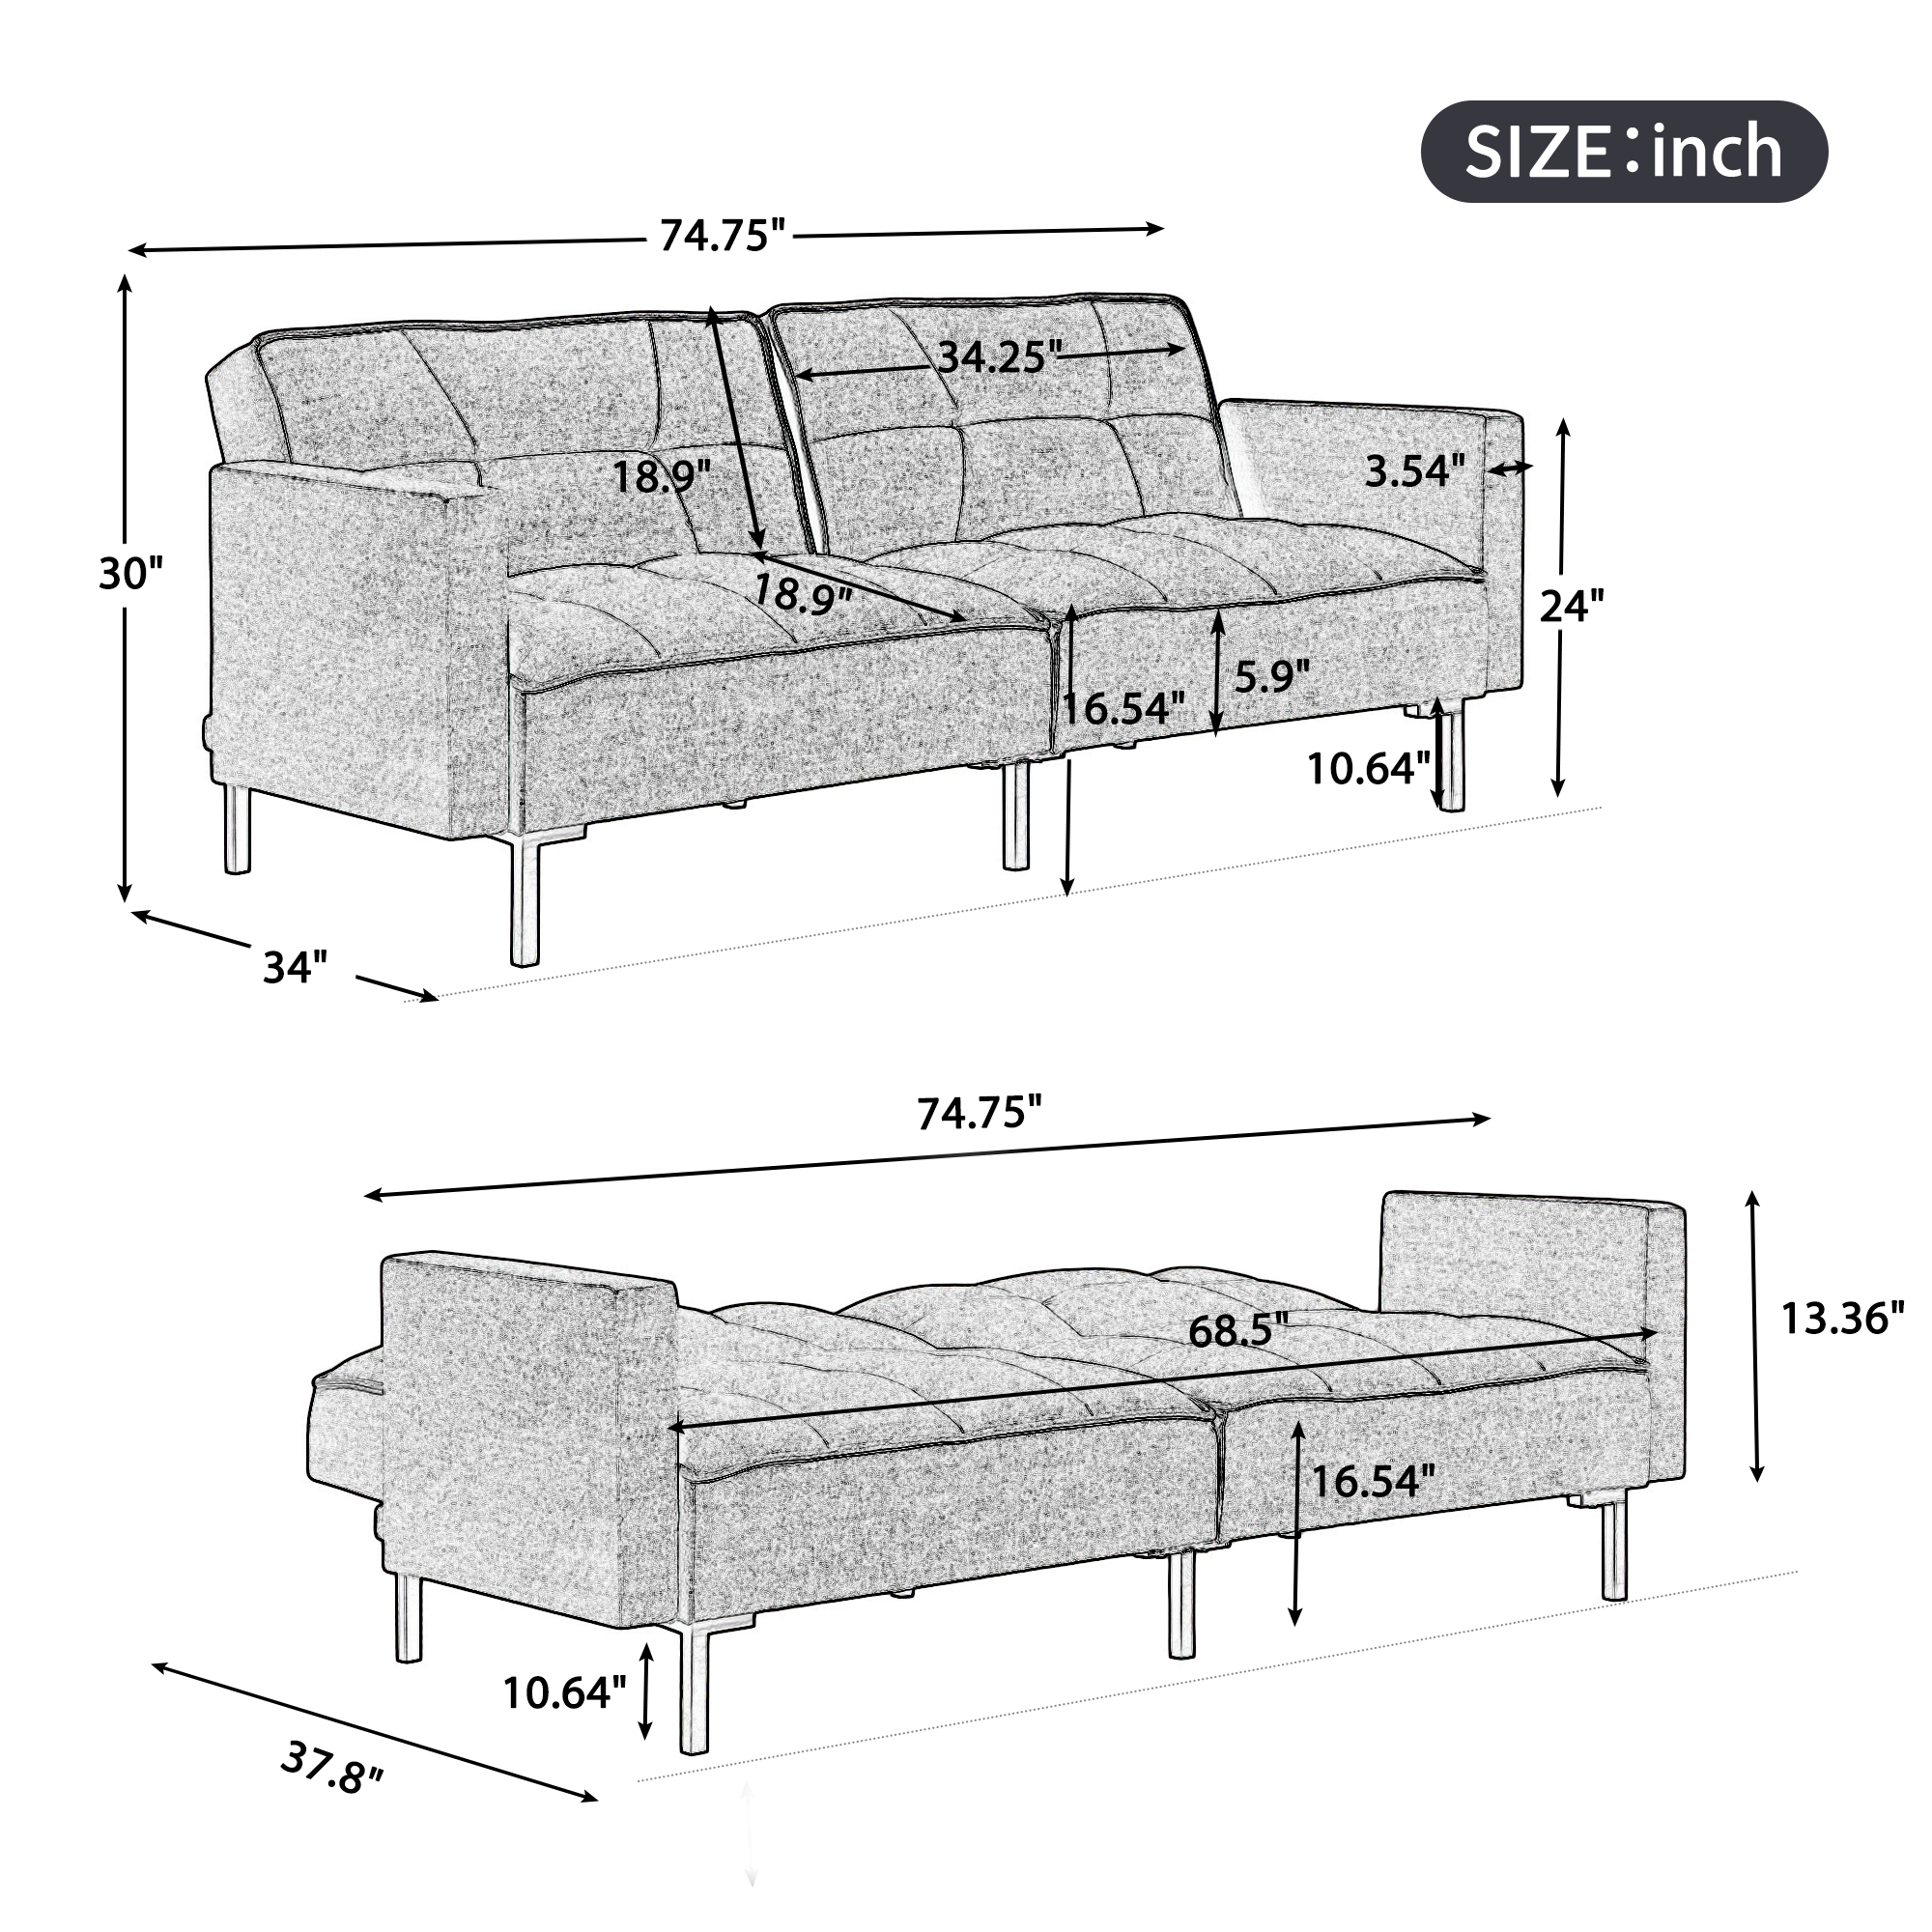 Linen Upholstered Modern Convertible Sofa Bed - SG000376AAA